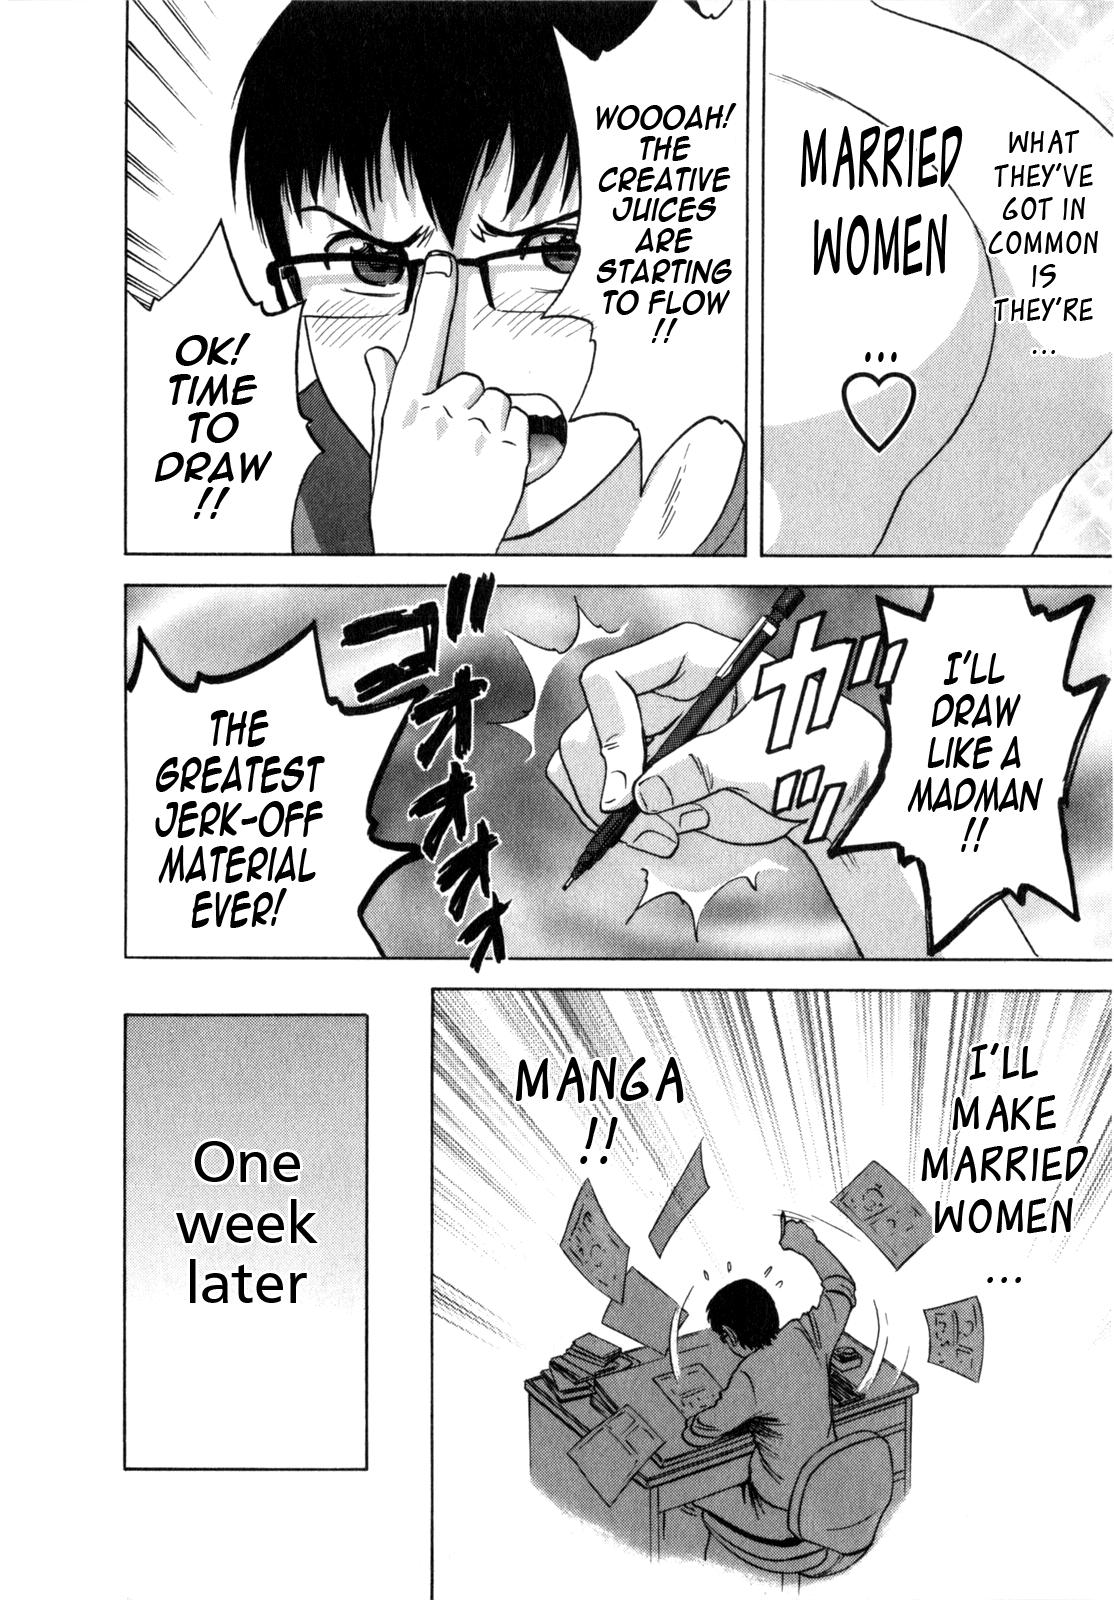 Life with Married Women Just Like a Manga 1 66